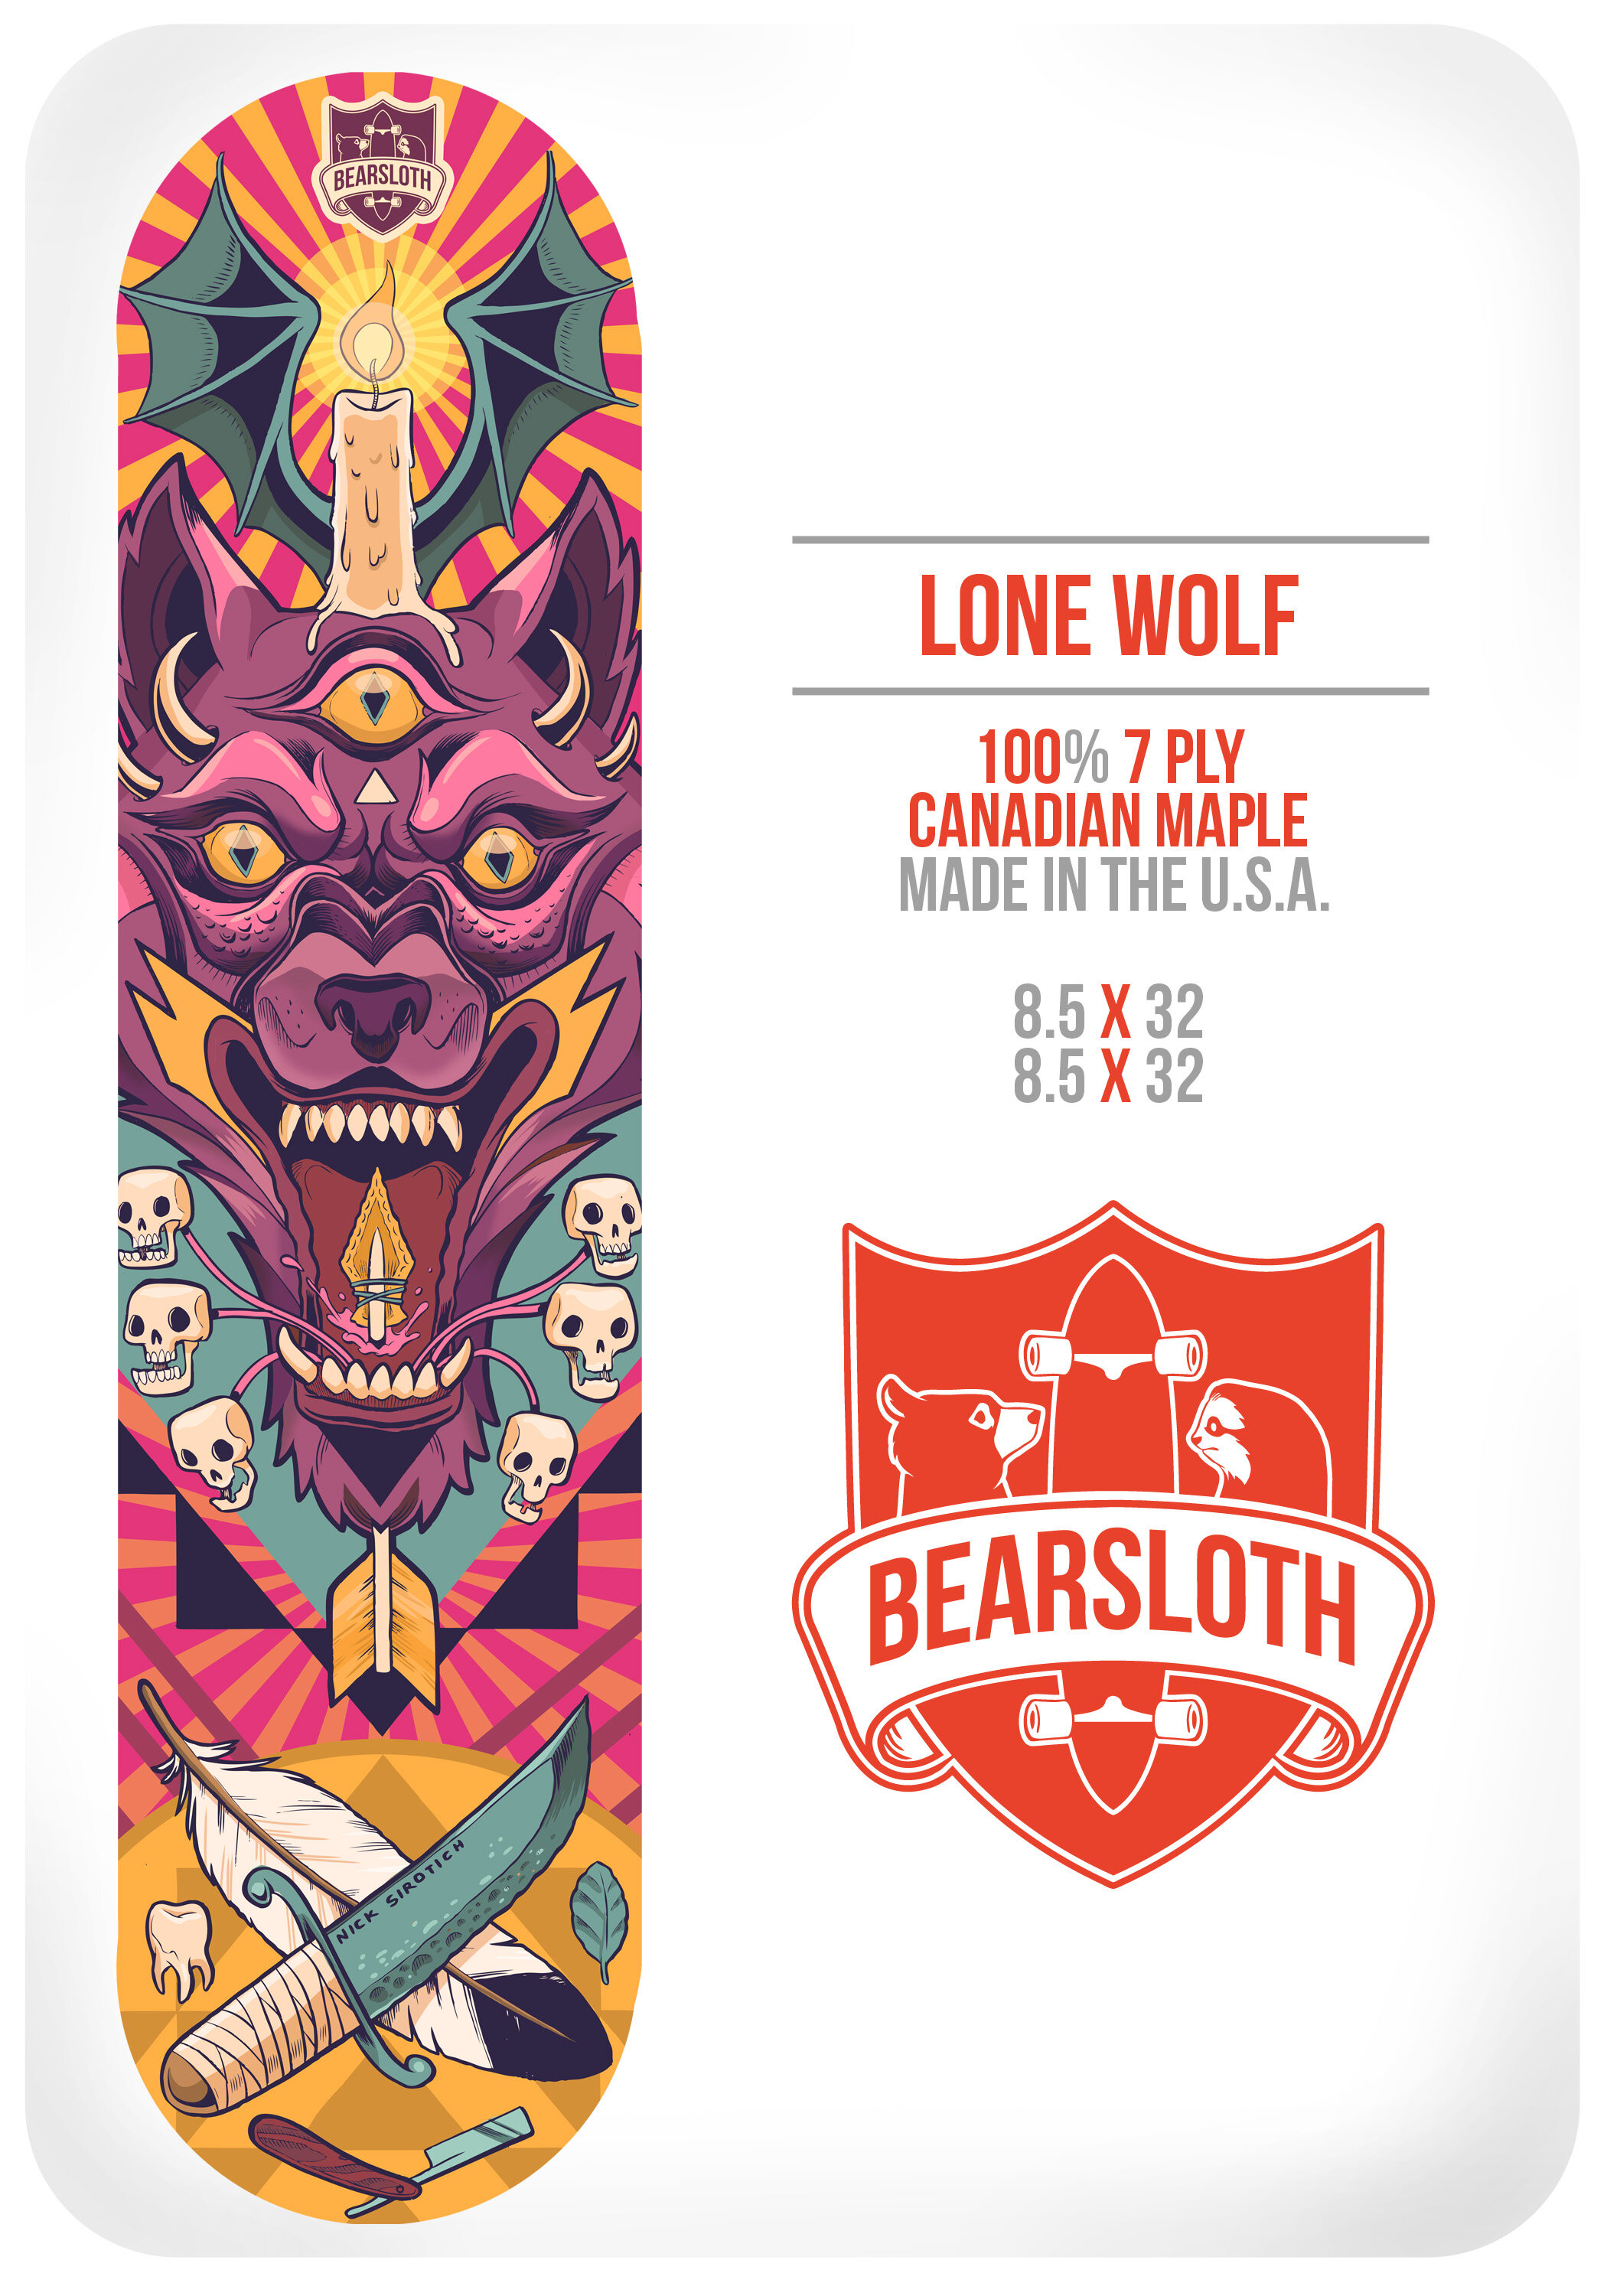 Bearsloth Lone Wolf Promo.jpg